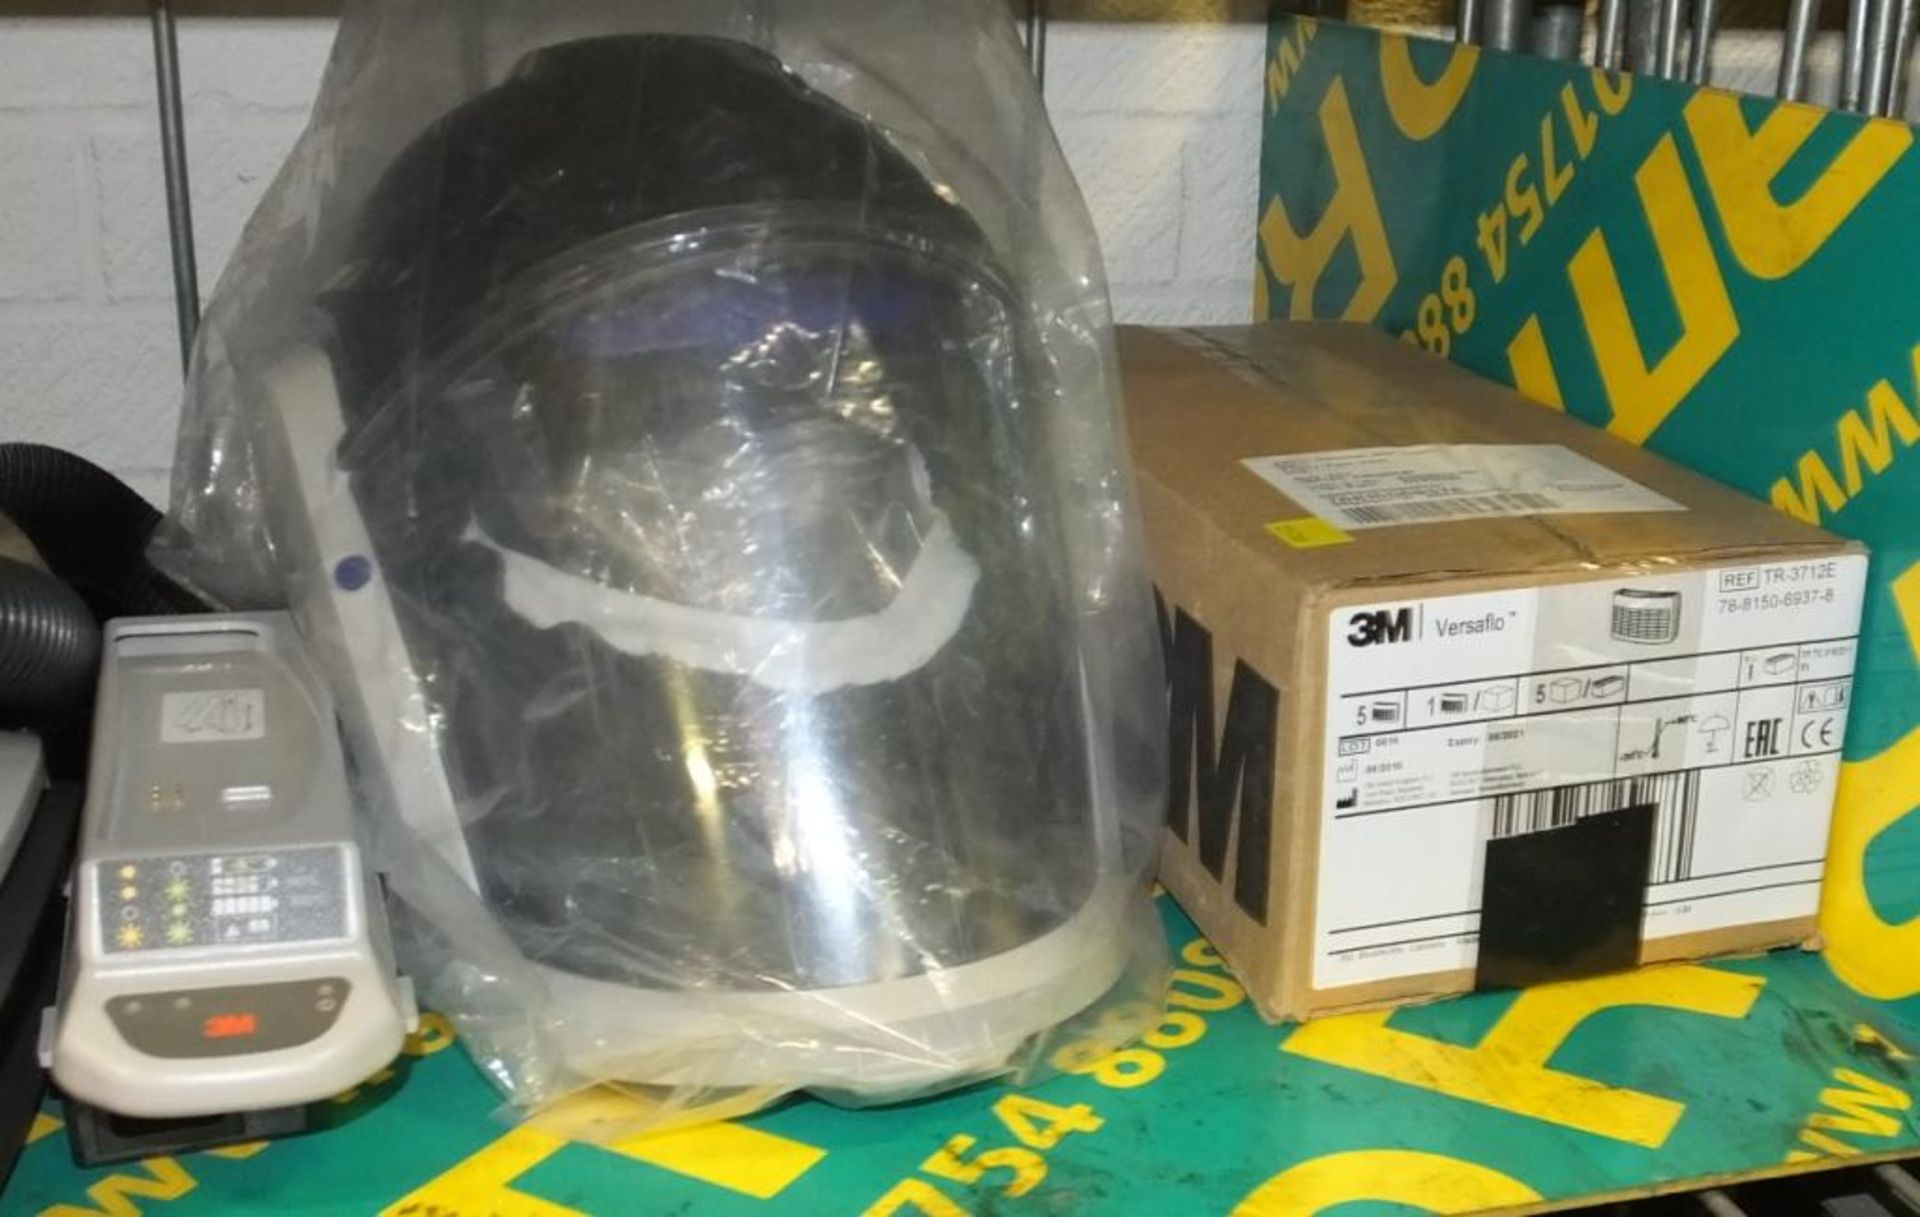 3M Versaflo M300 Respirator Helmet And Filters - Image 3 of 3